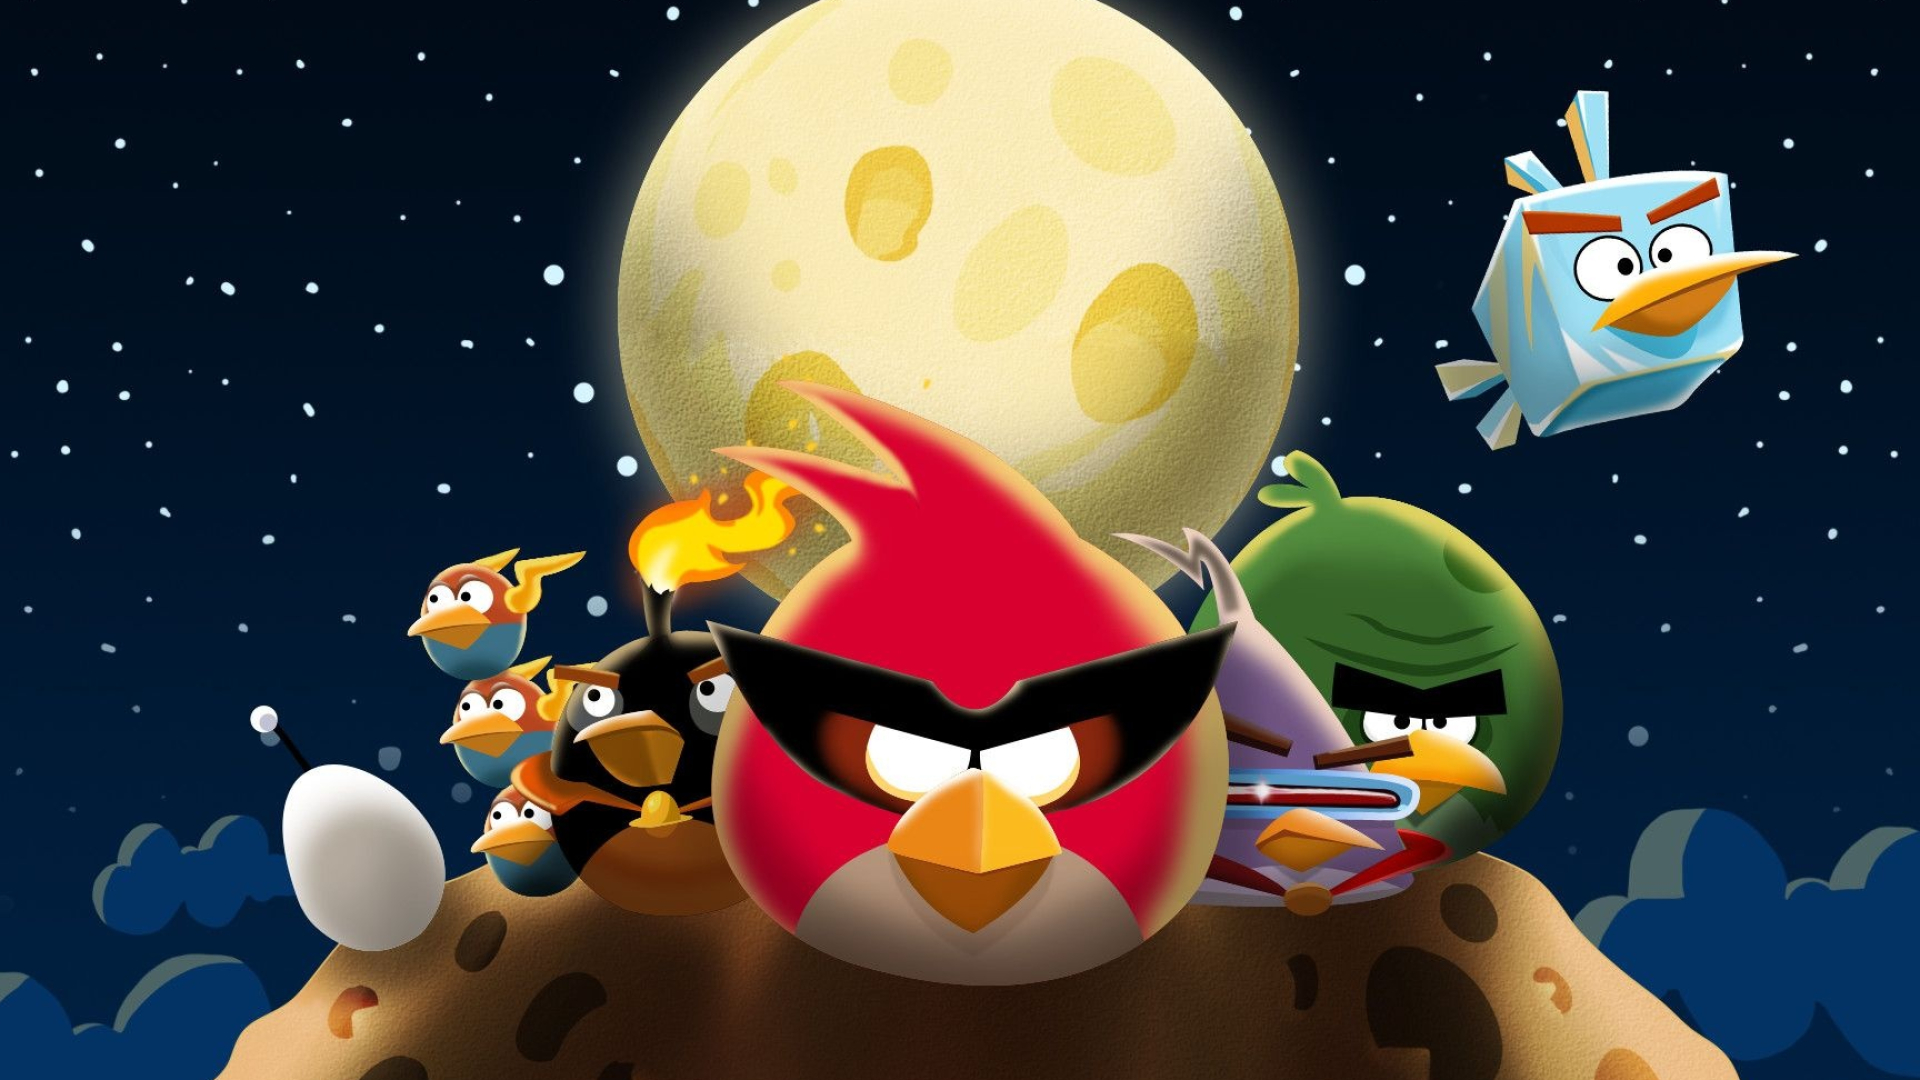 Angry Birds Space wallpapers, Galactic scenery, Cosmic adventures, Bird characters, 1920x1080 Full HD Desktop